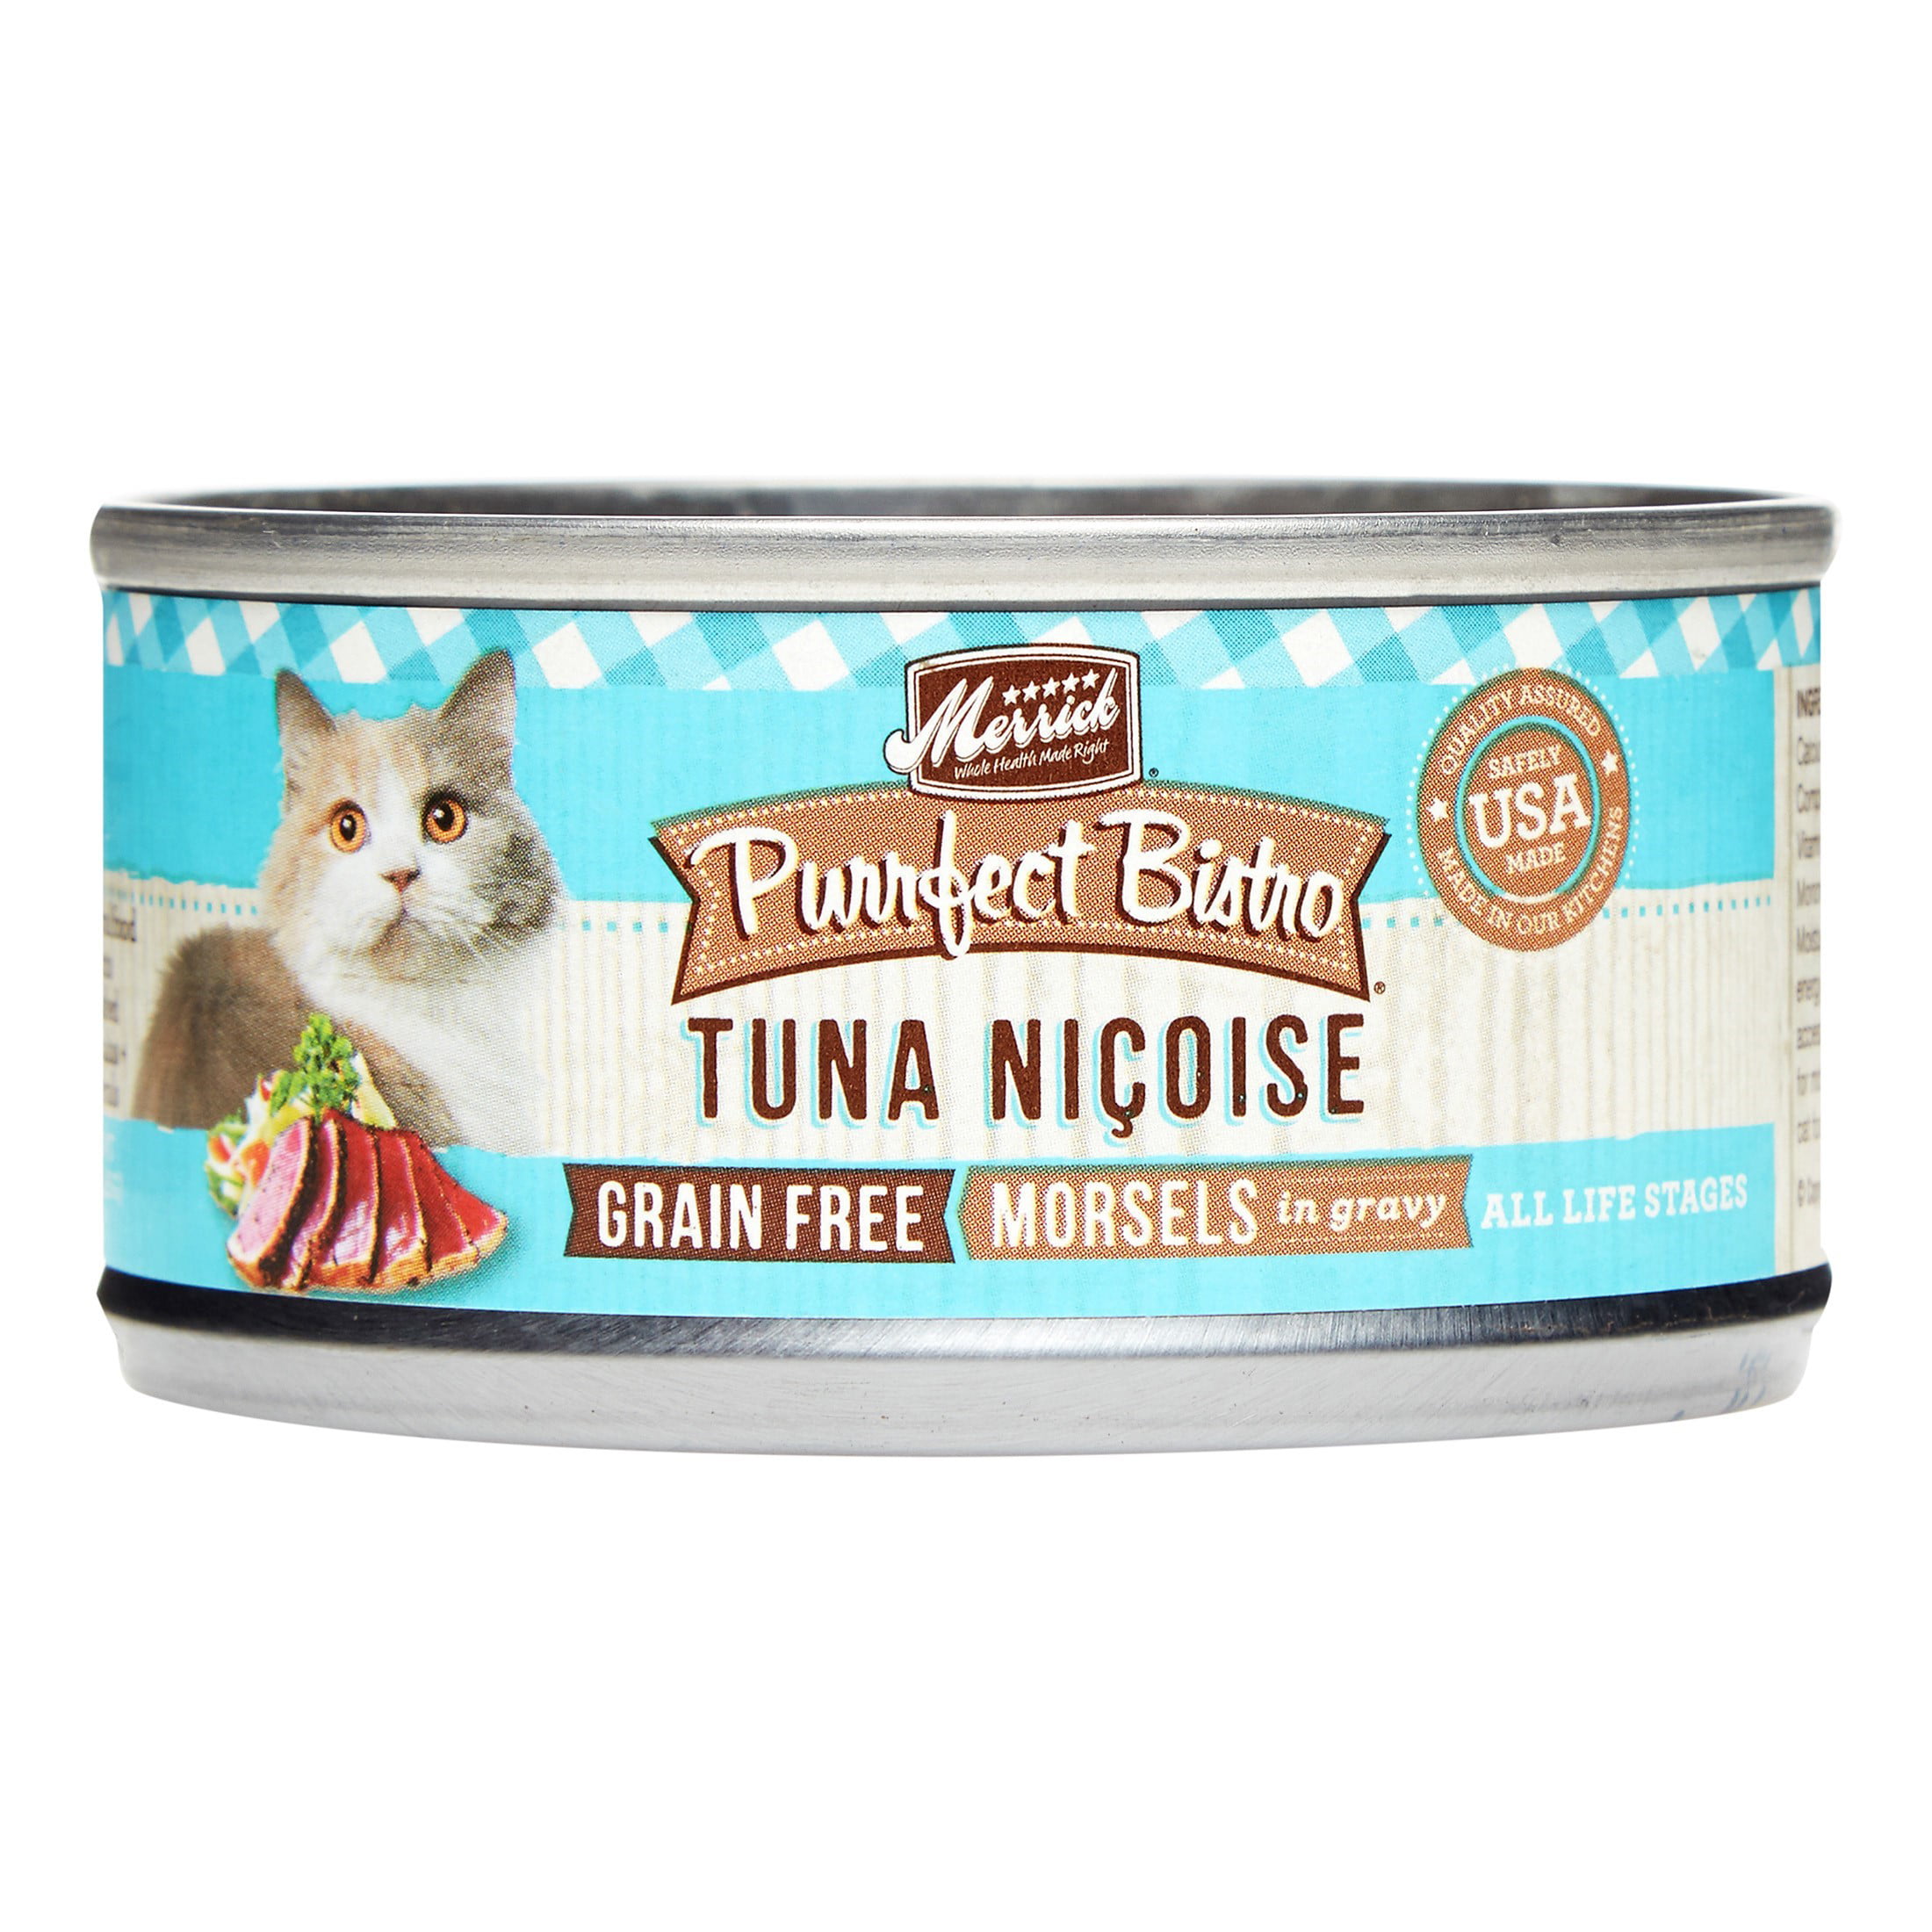 Merrick Purrfect Bistro GrainFree Tuna Nicoise Wet Cat Food, 3 Oz, 24